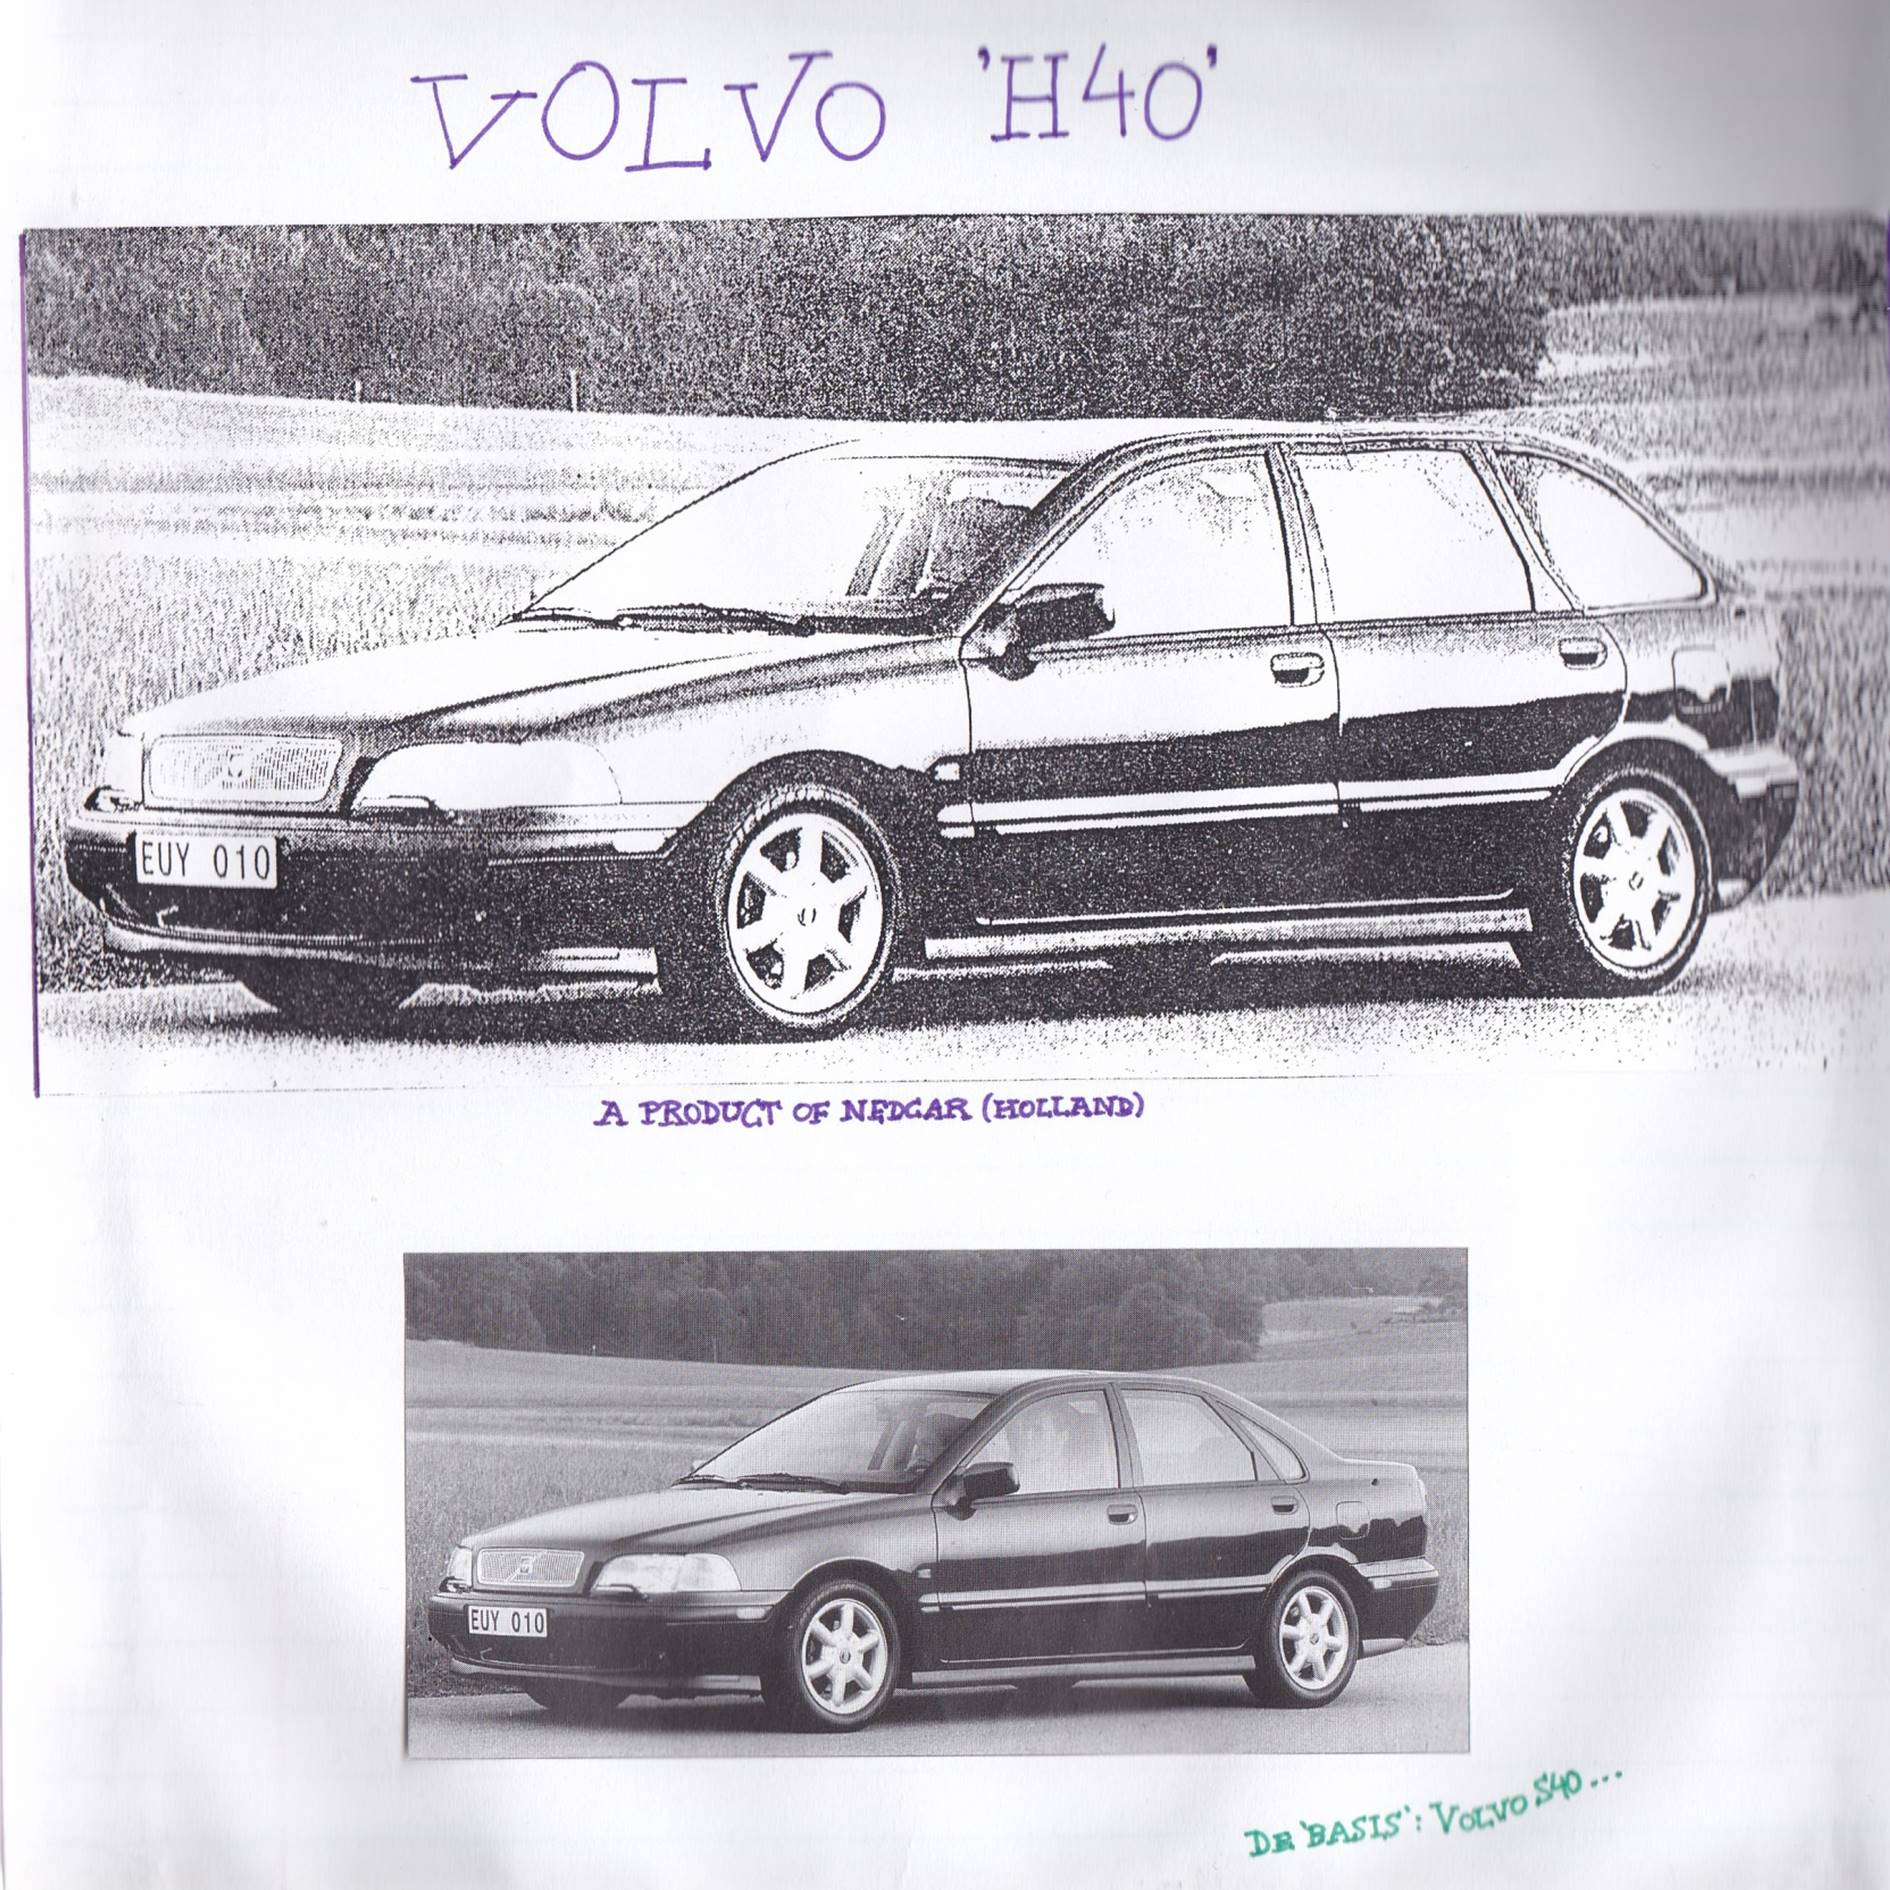 Volvo 'H40'